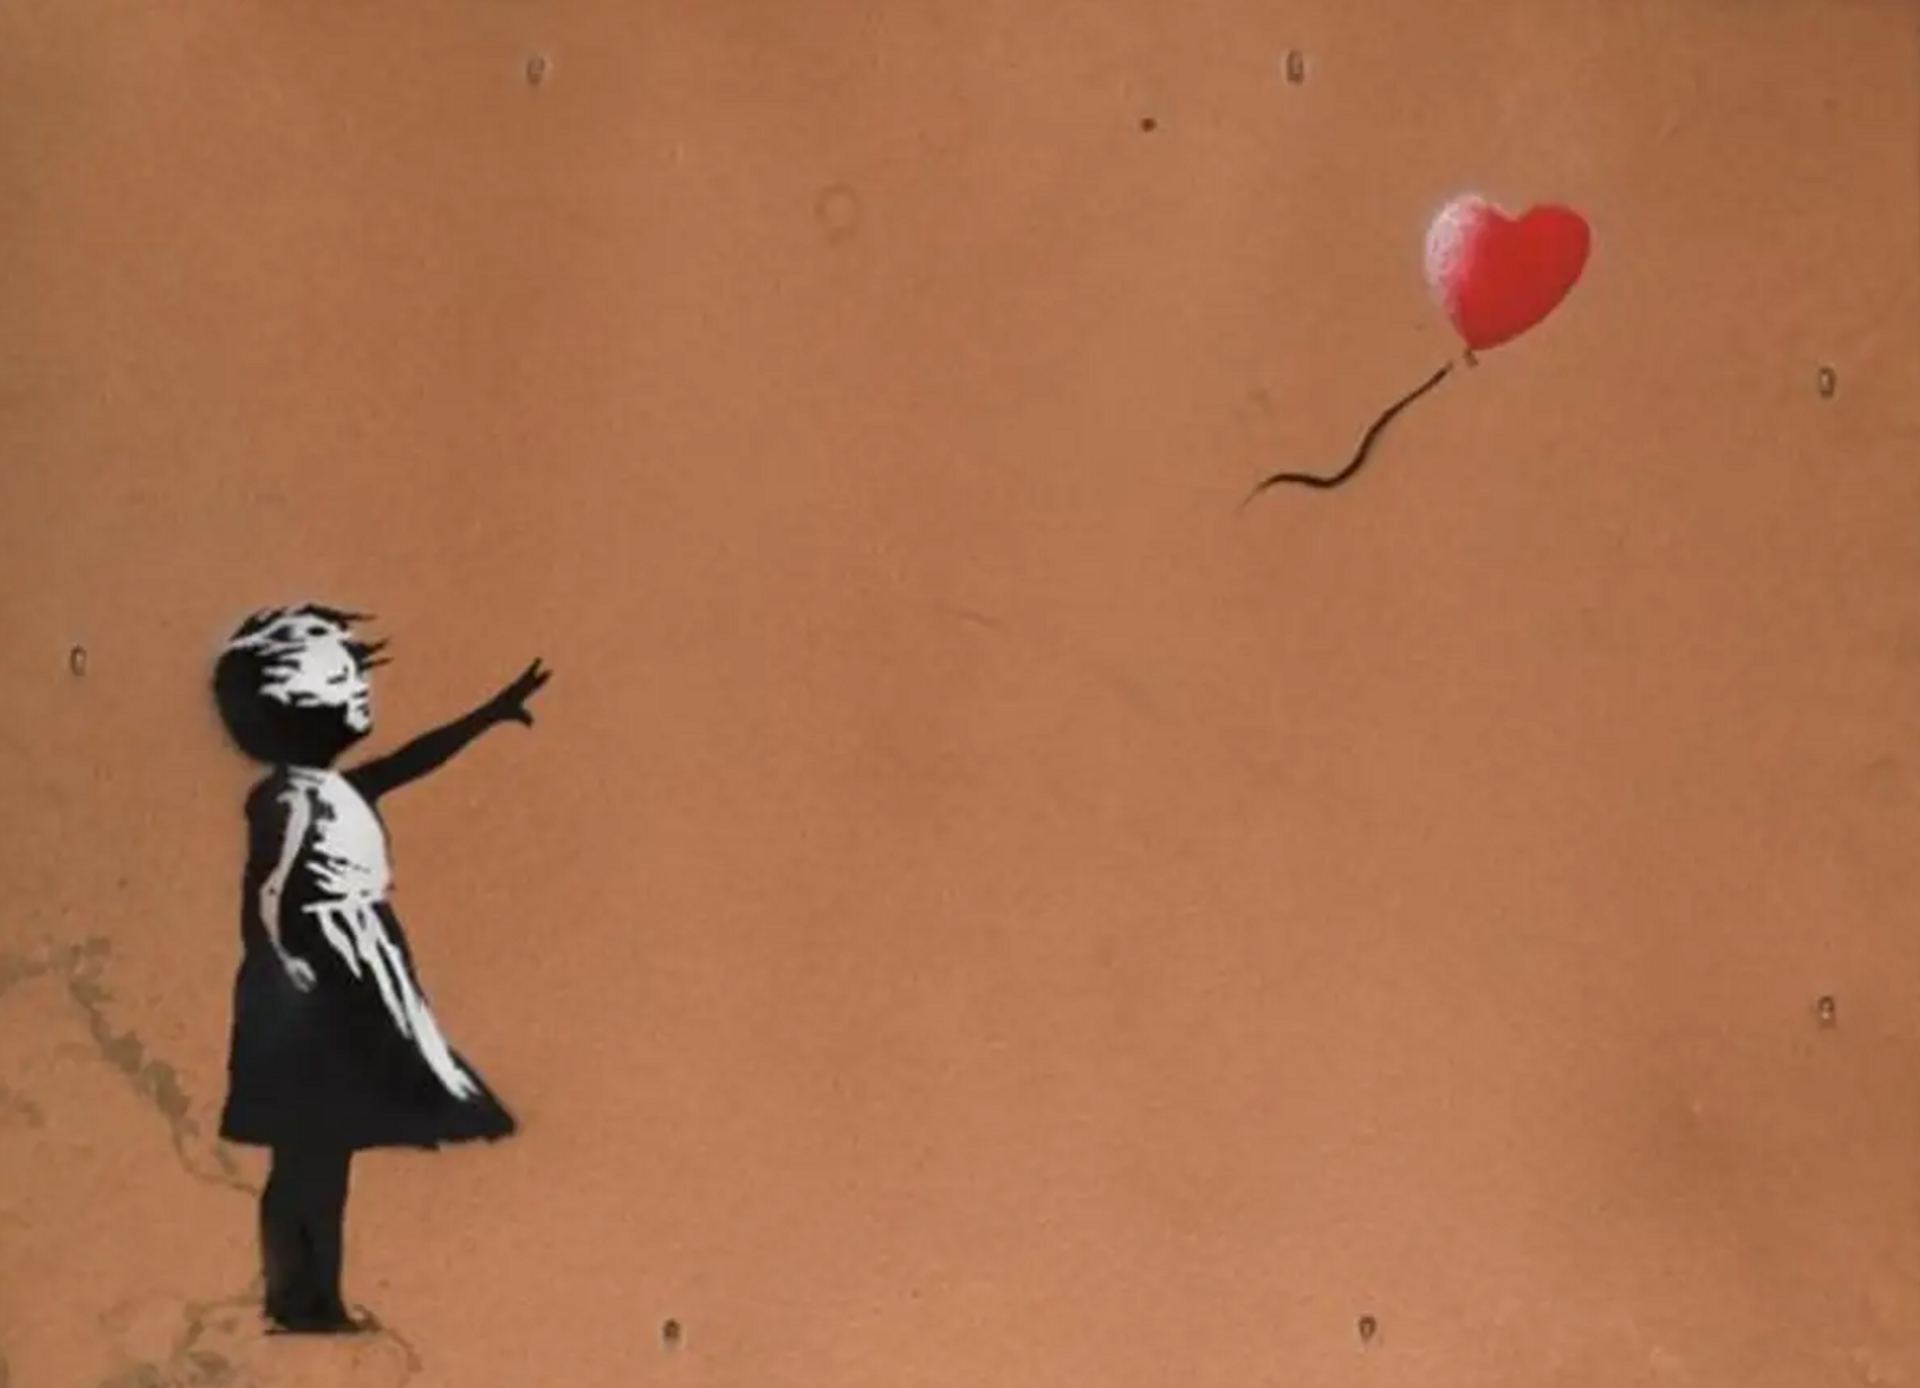 Verblinding Arrangement Groot universum Girl With Balloon by Banksy Background & Meaning | MyArtBroker